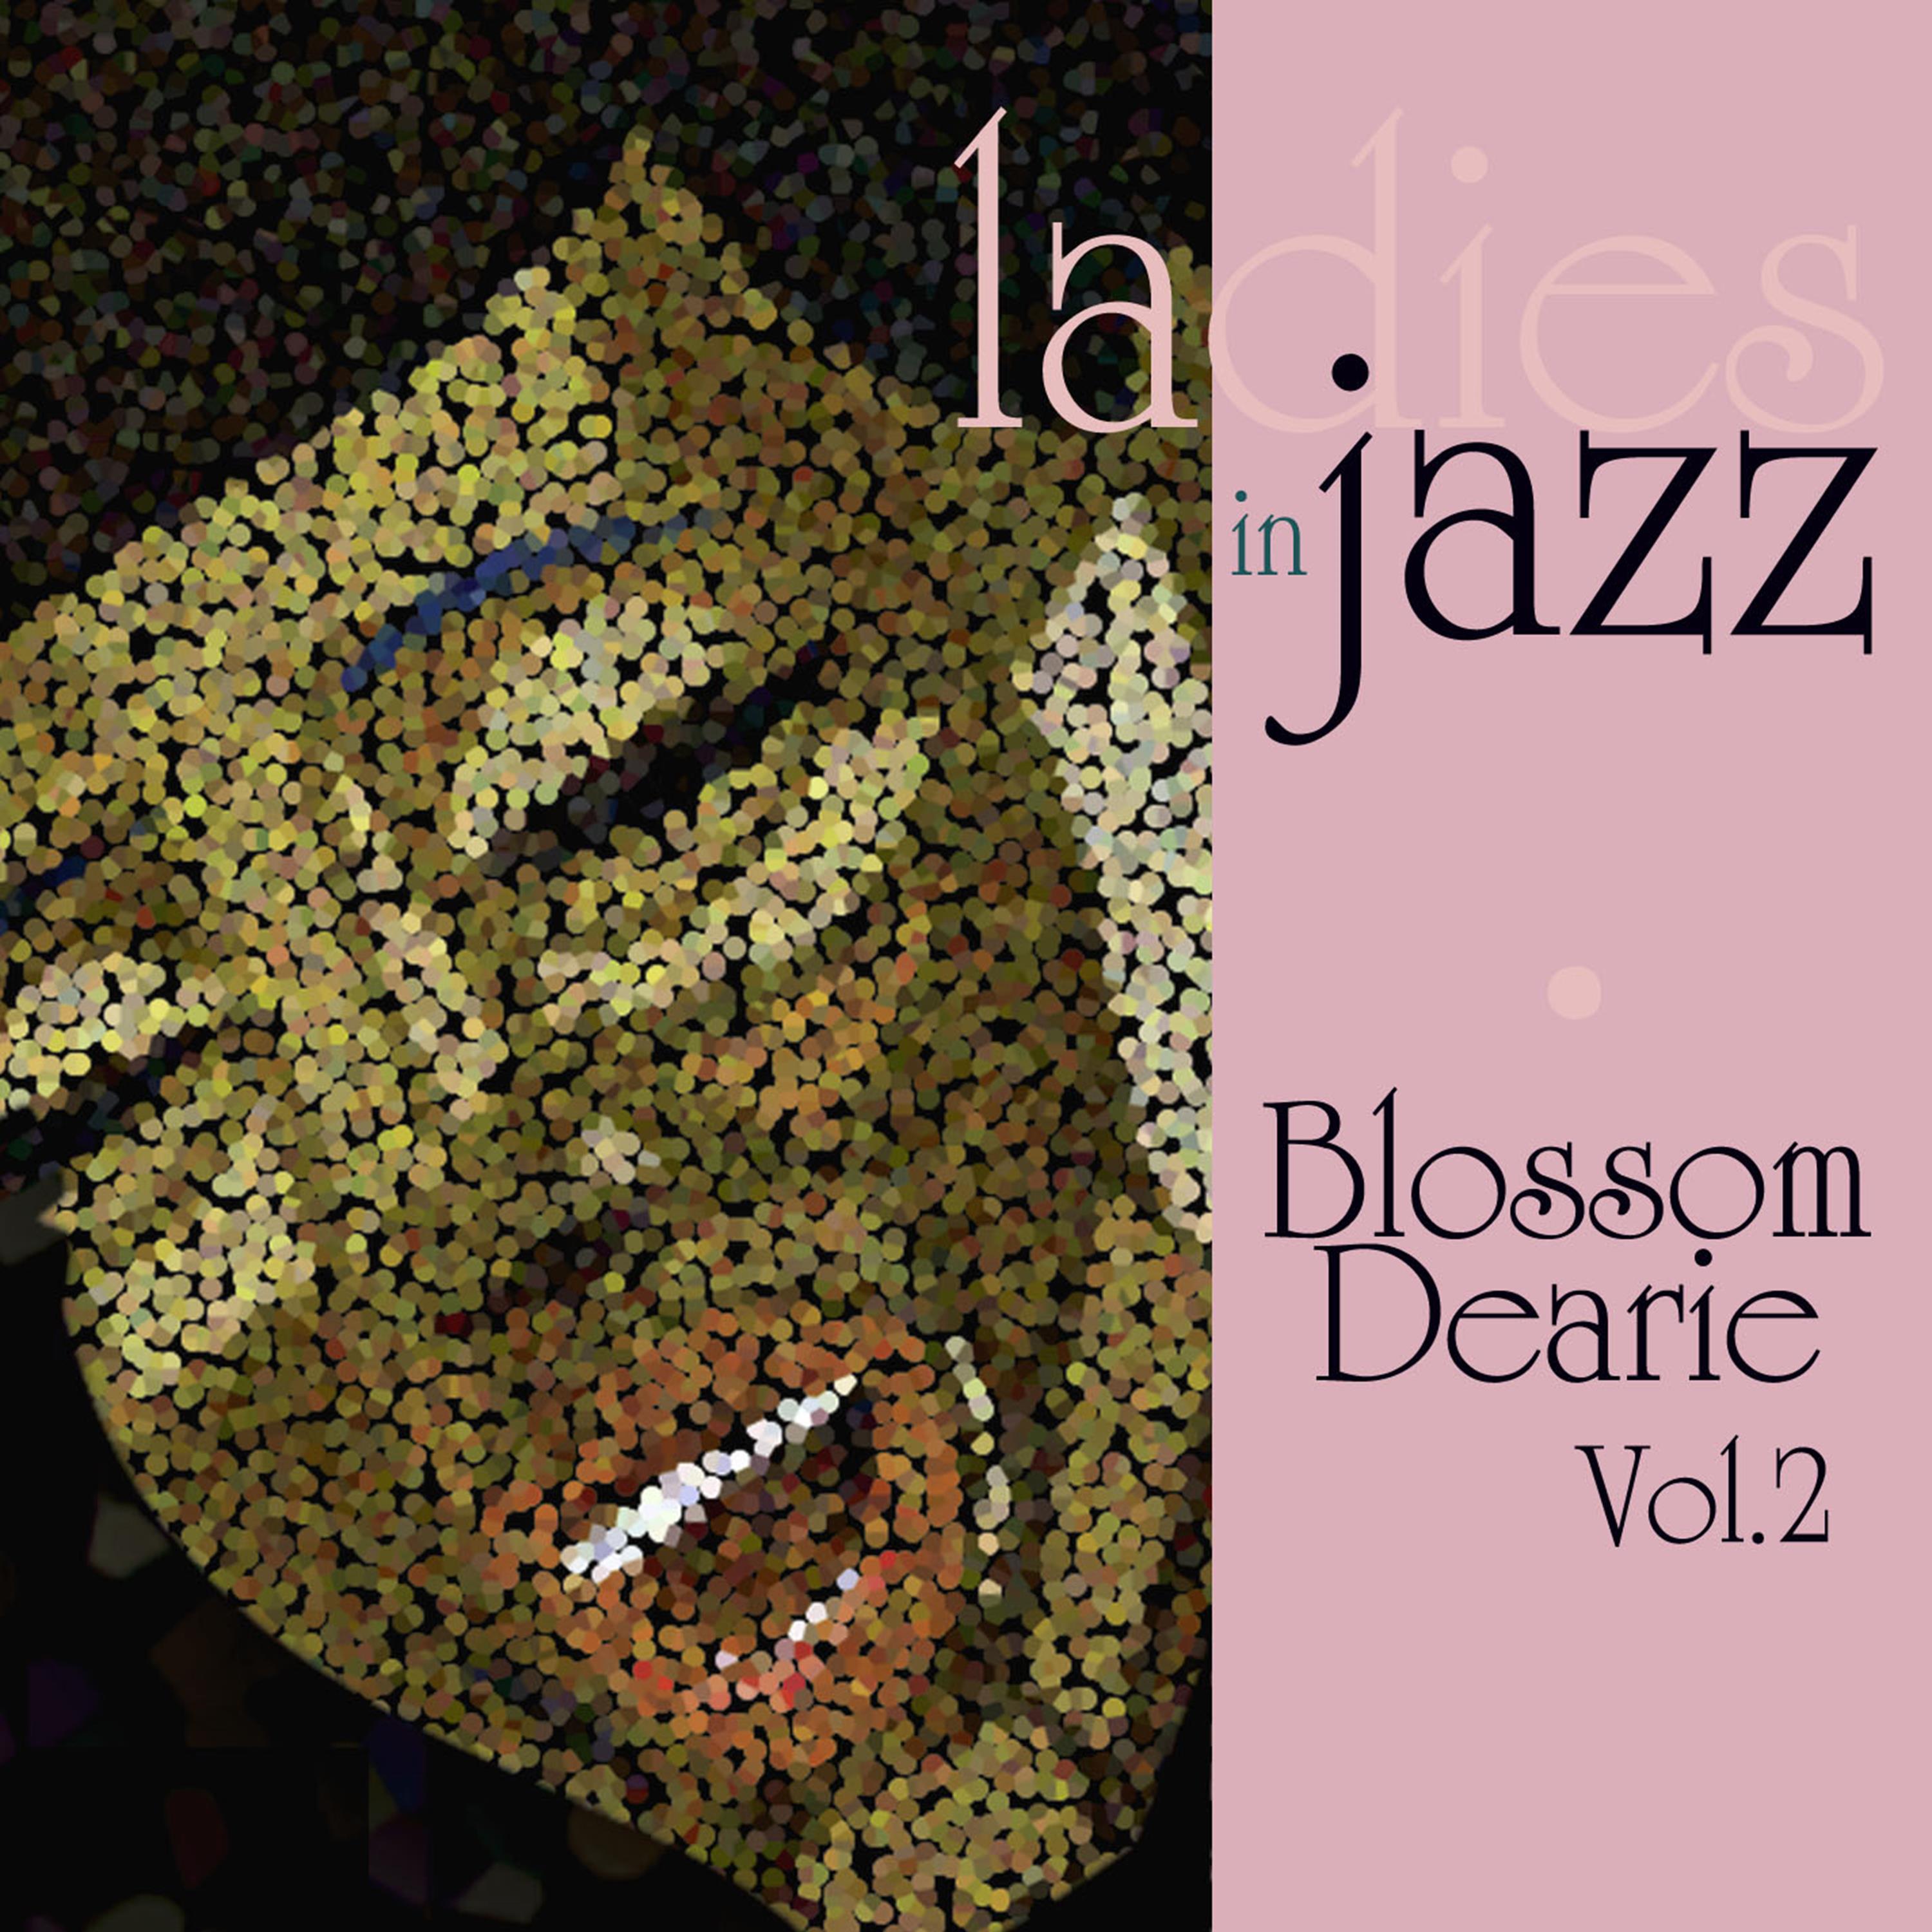 Ladies in Jazz - Blossom Dearie, Vol. 2